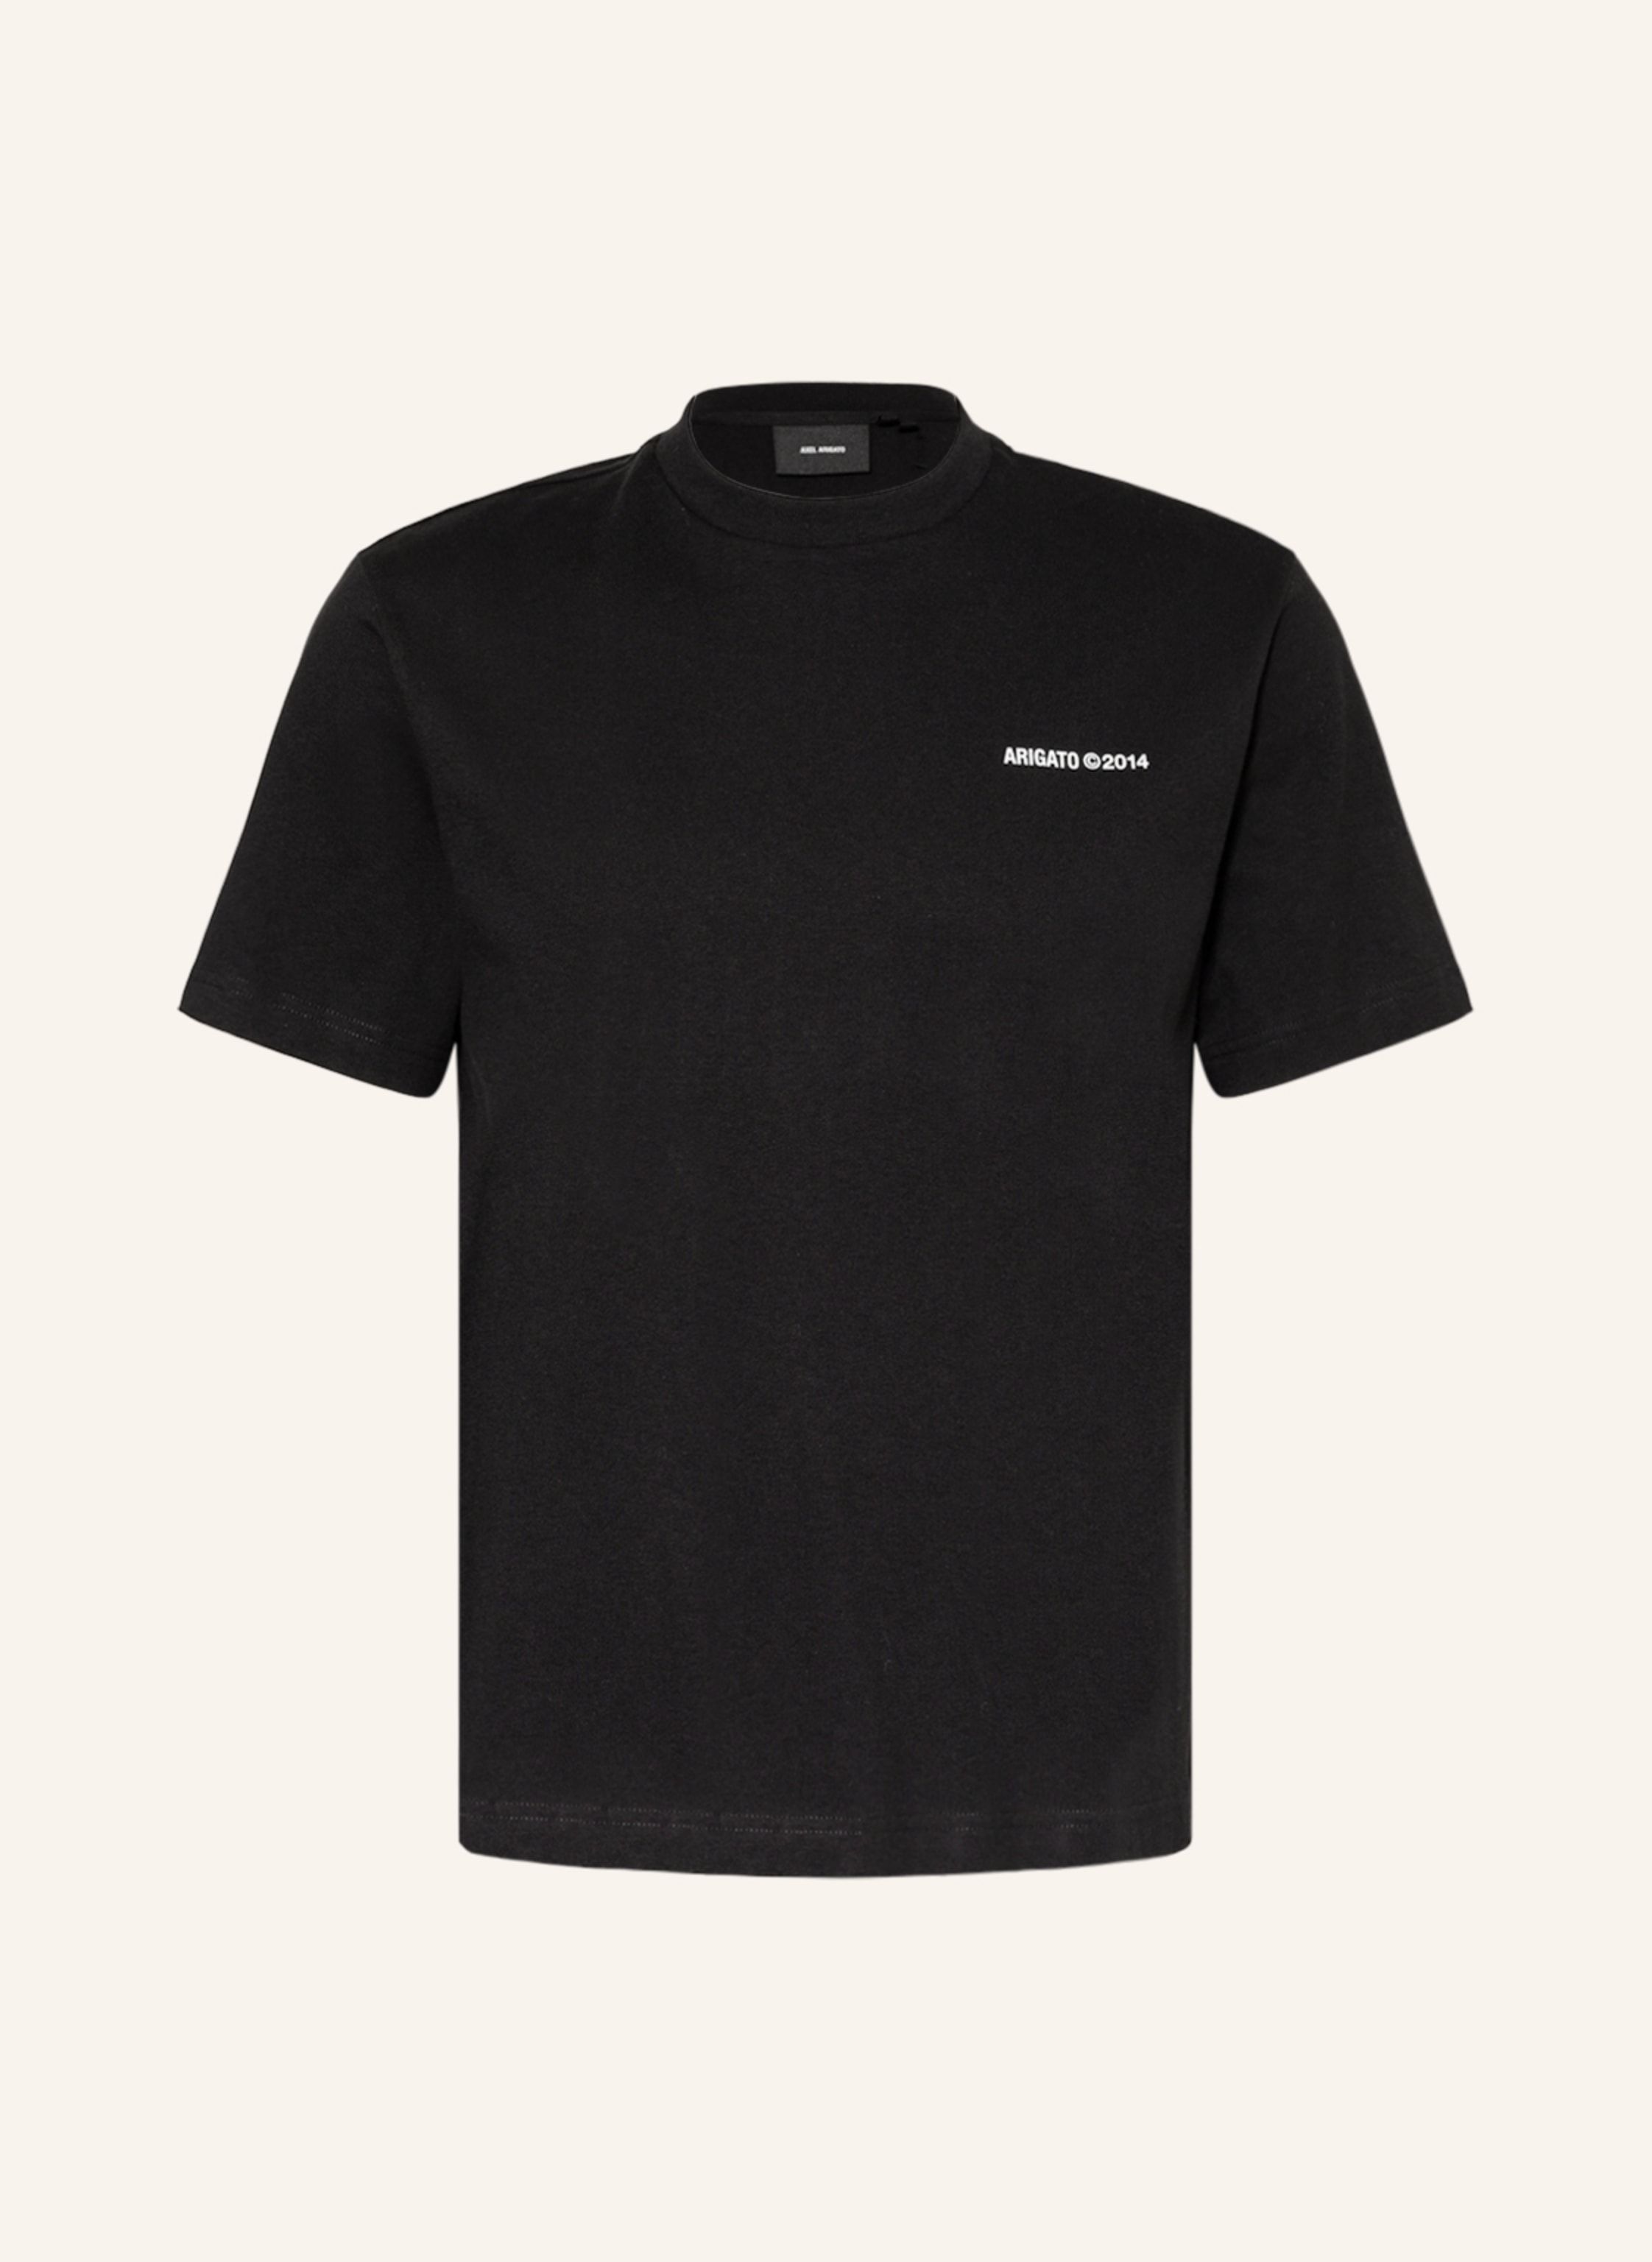 AXEL ARIGATO  T-Shirt | Breuninger (DE/ AT)